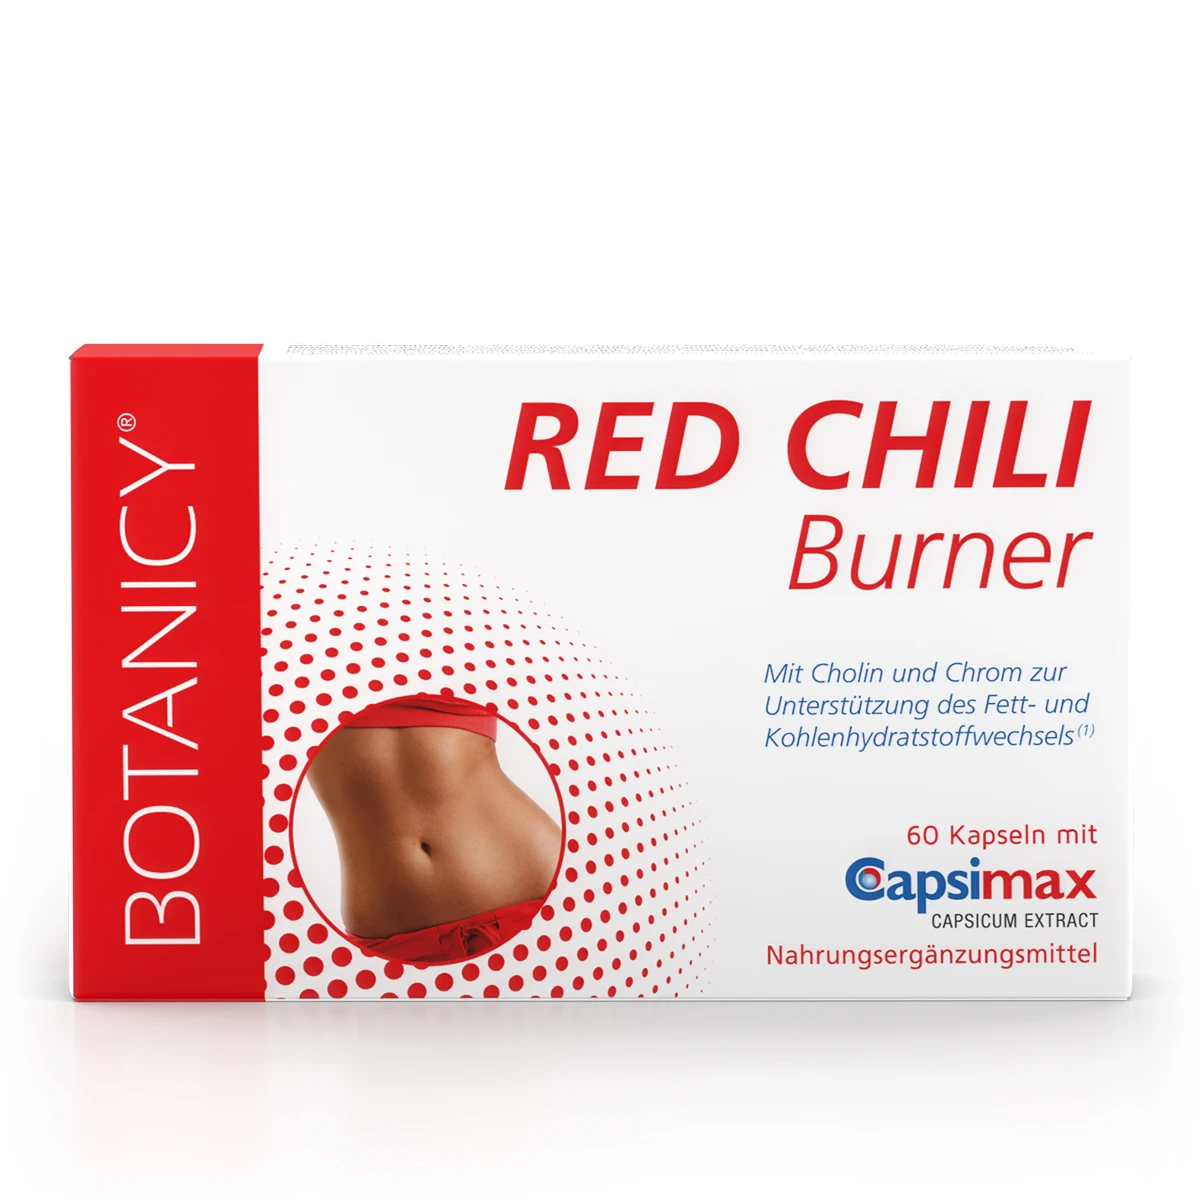 RED CHILI BURNER - Capsaicin Kapseln mit Capsimax